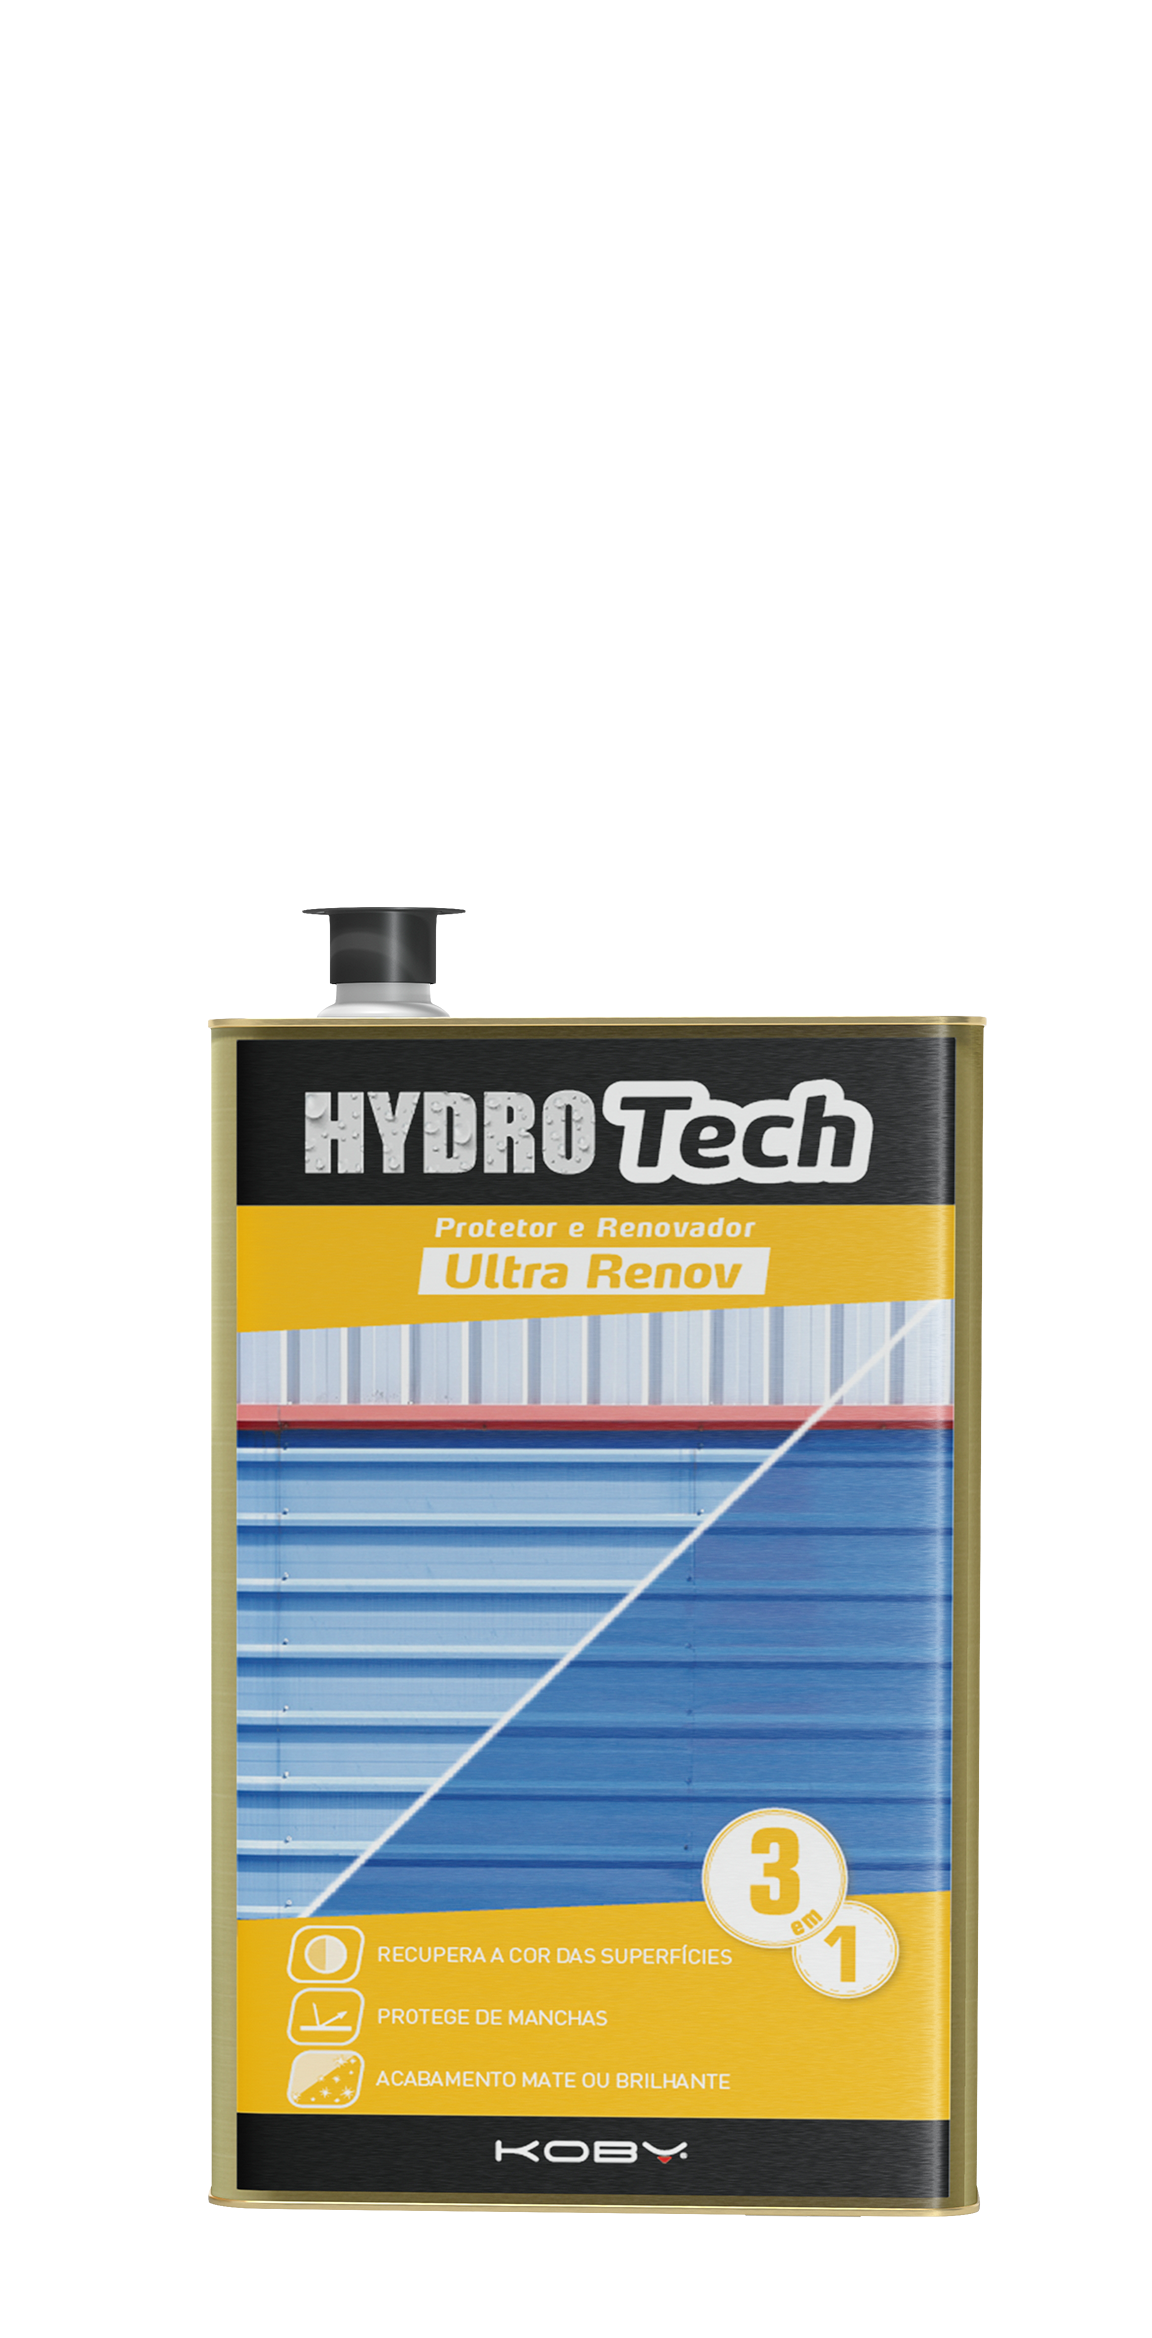 Hydrotech Ultra Renov